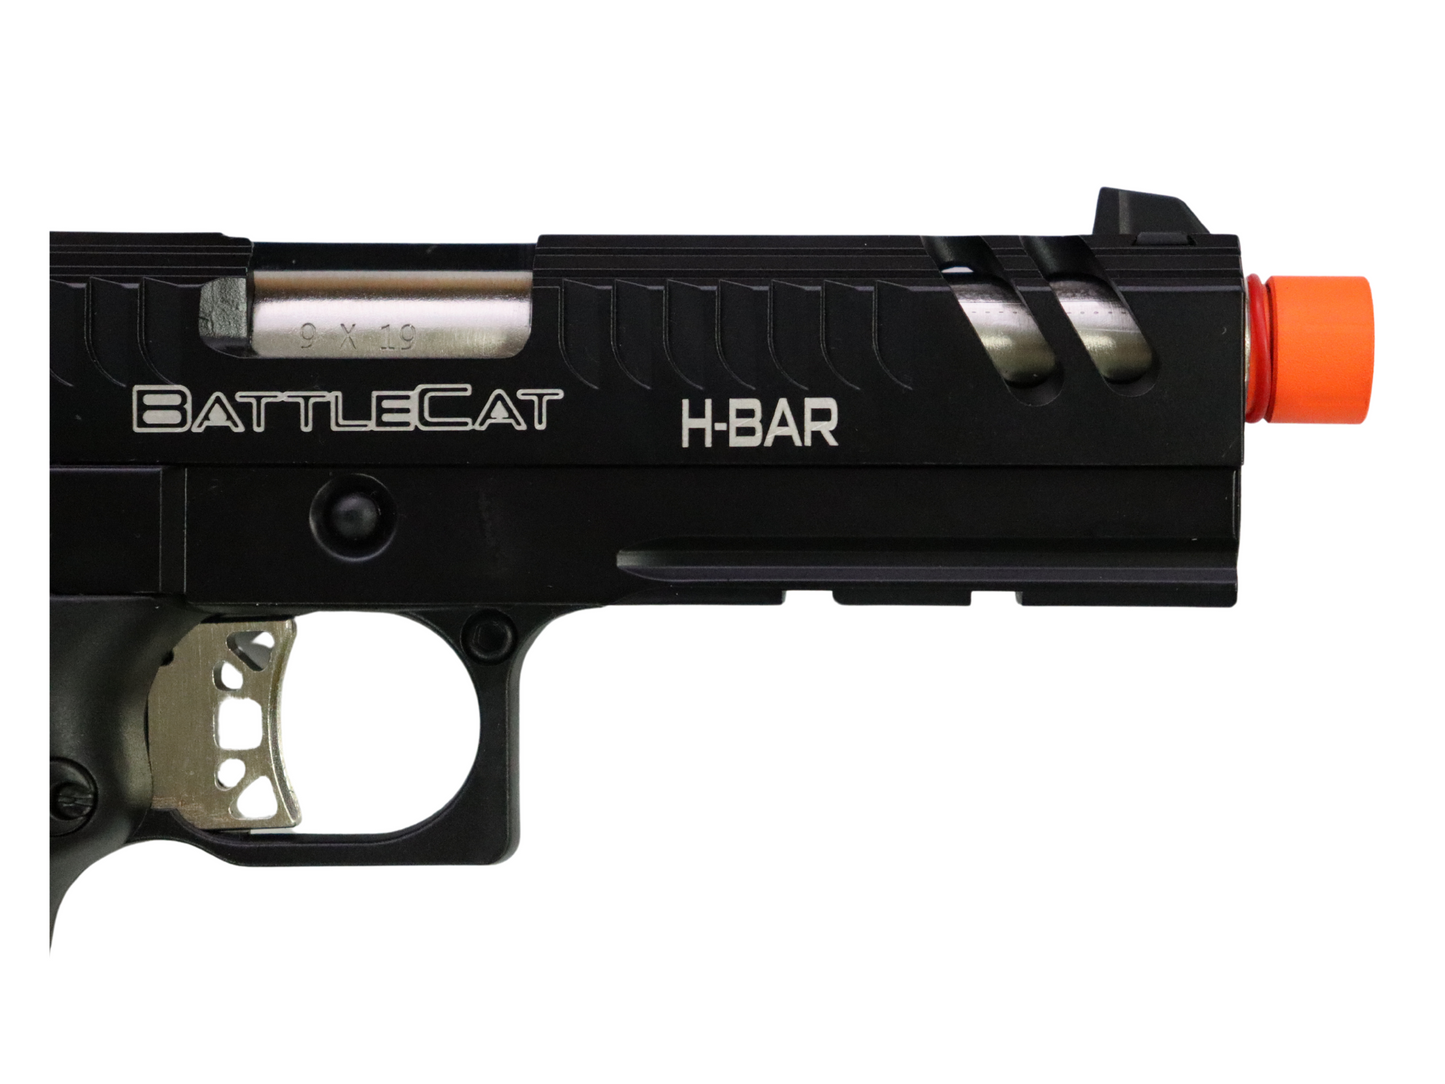 
                  
                    Army Armament Stage 2 R610-3 Limcat  4.3 GBB Pistol Gel Blaster
                  
                